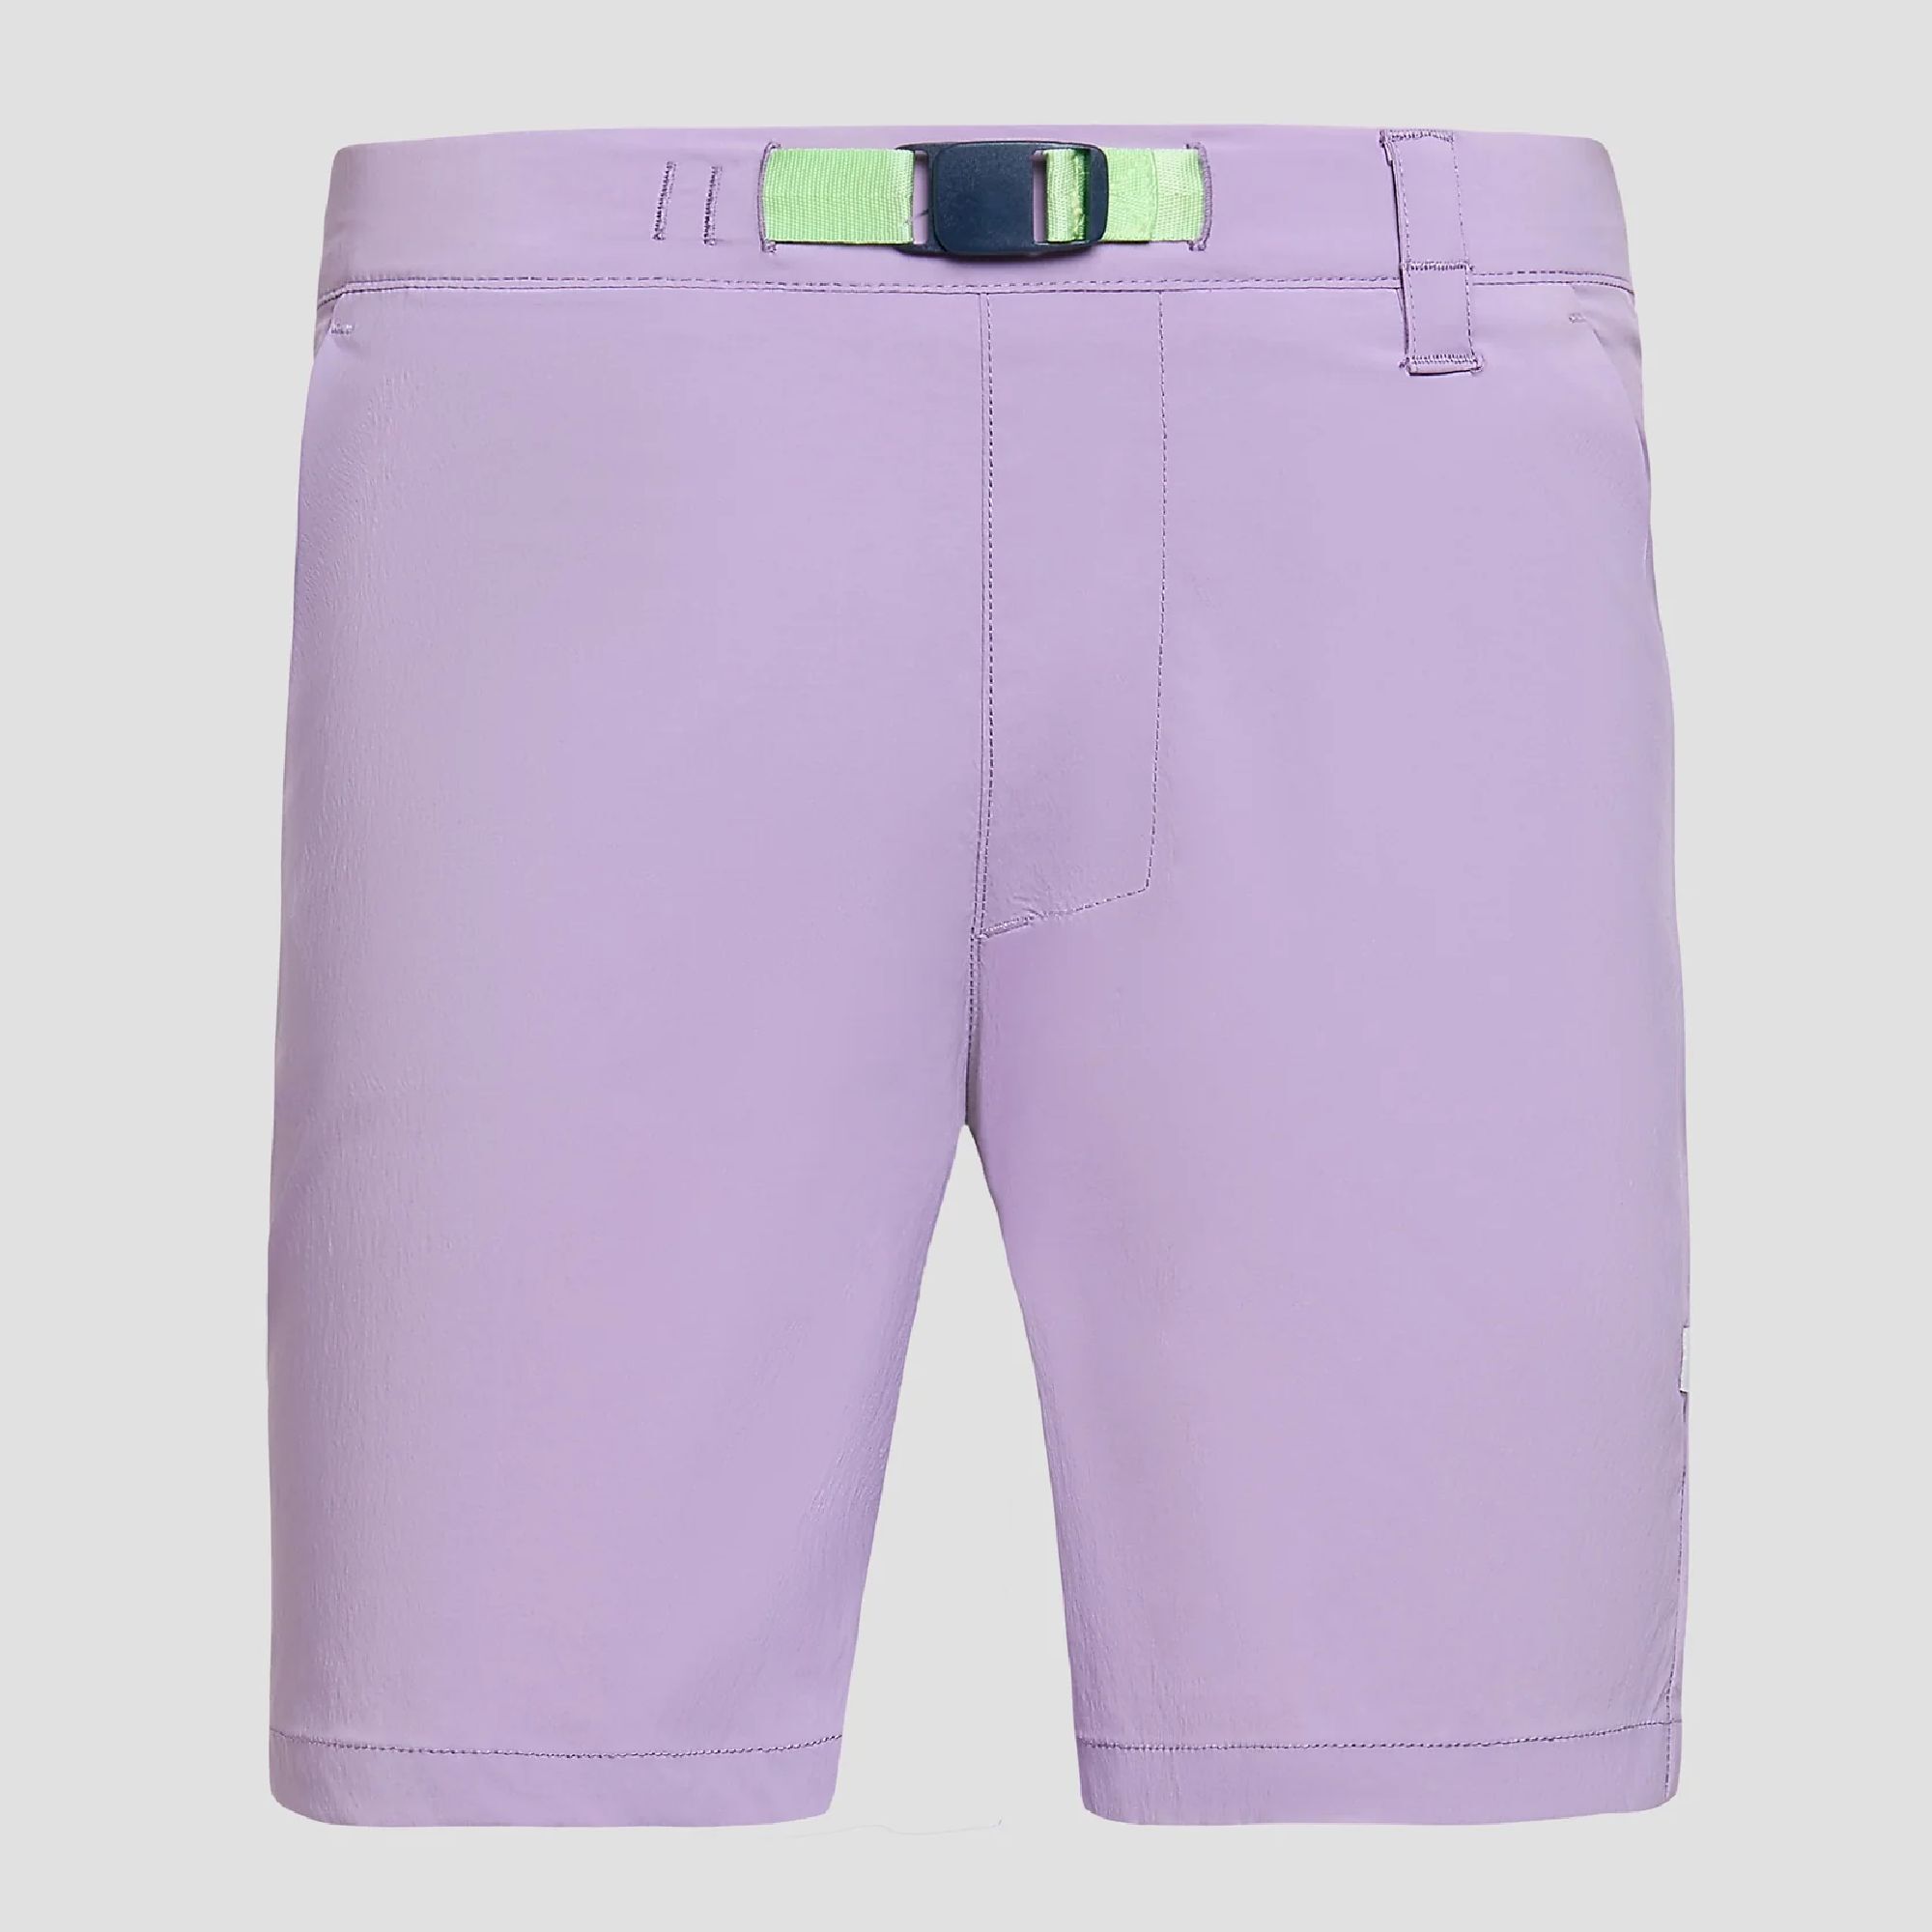 Namuk Linn Everyday Outdoor Shorts - Pantalones cortos - Niños | Hardloop